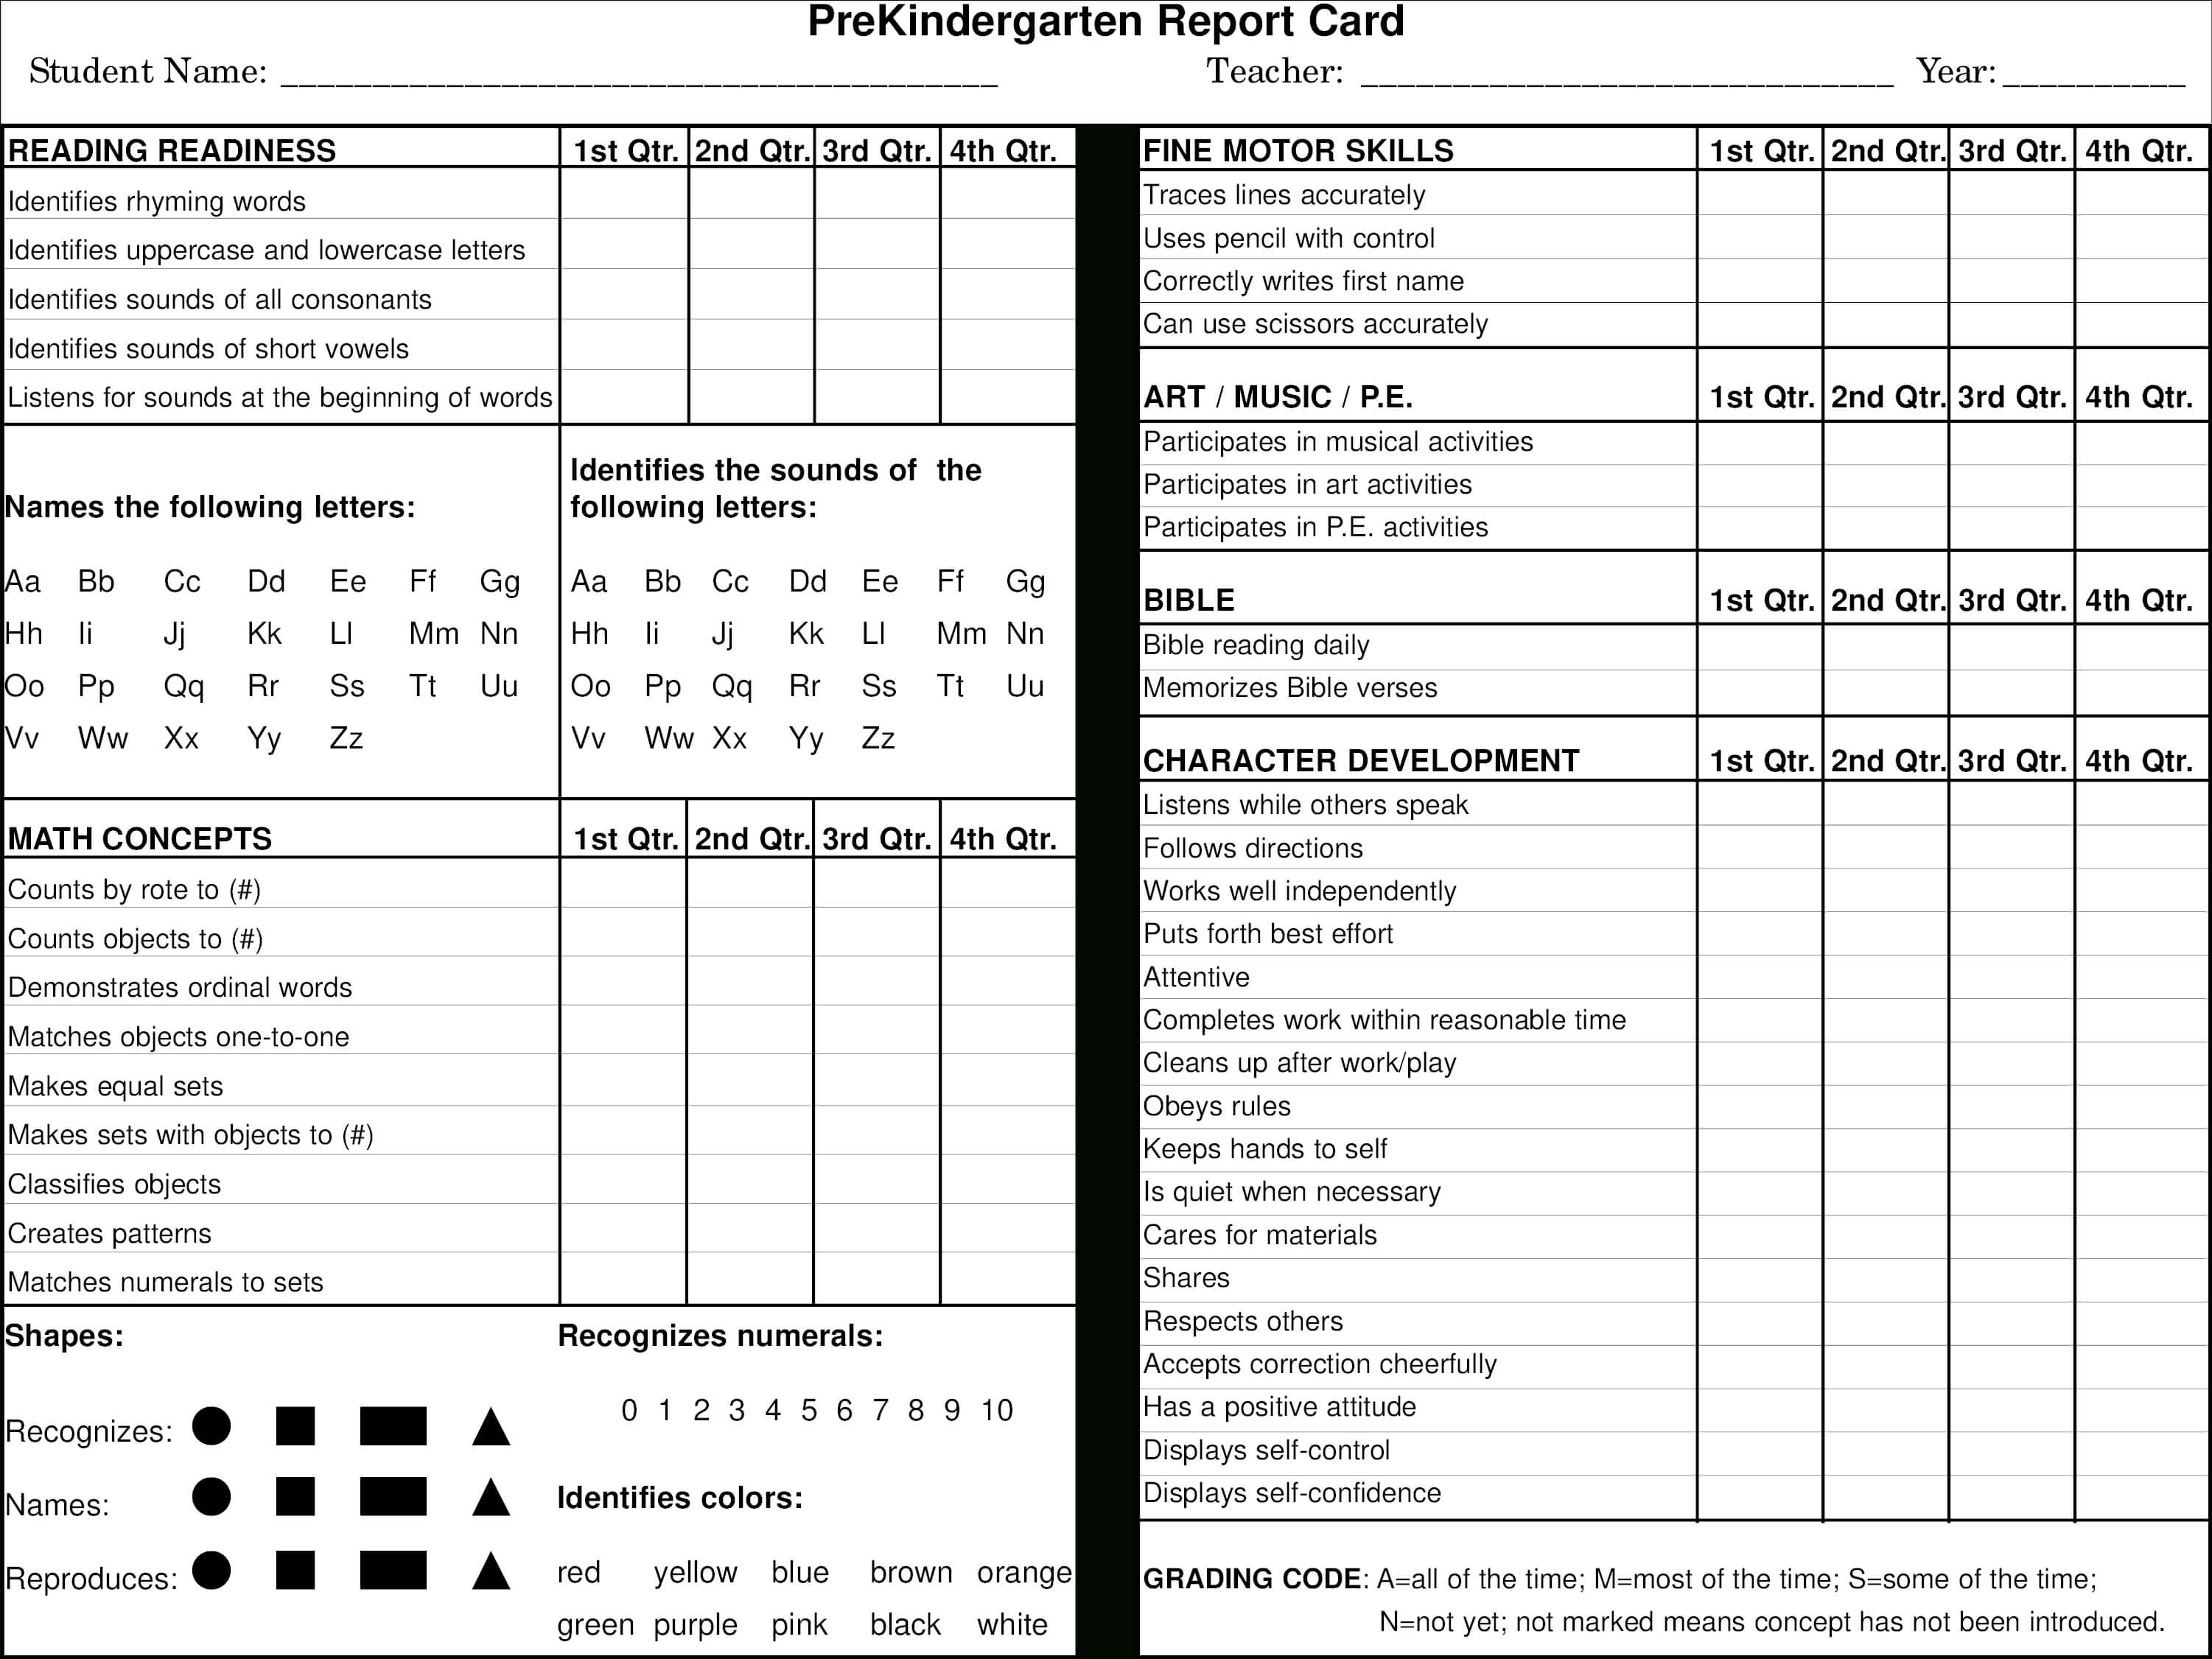 Preschool Report Card Main Image - Preschool Progress Report Intended For Character Report Card Template